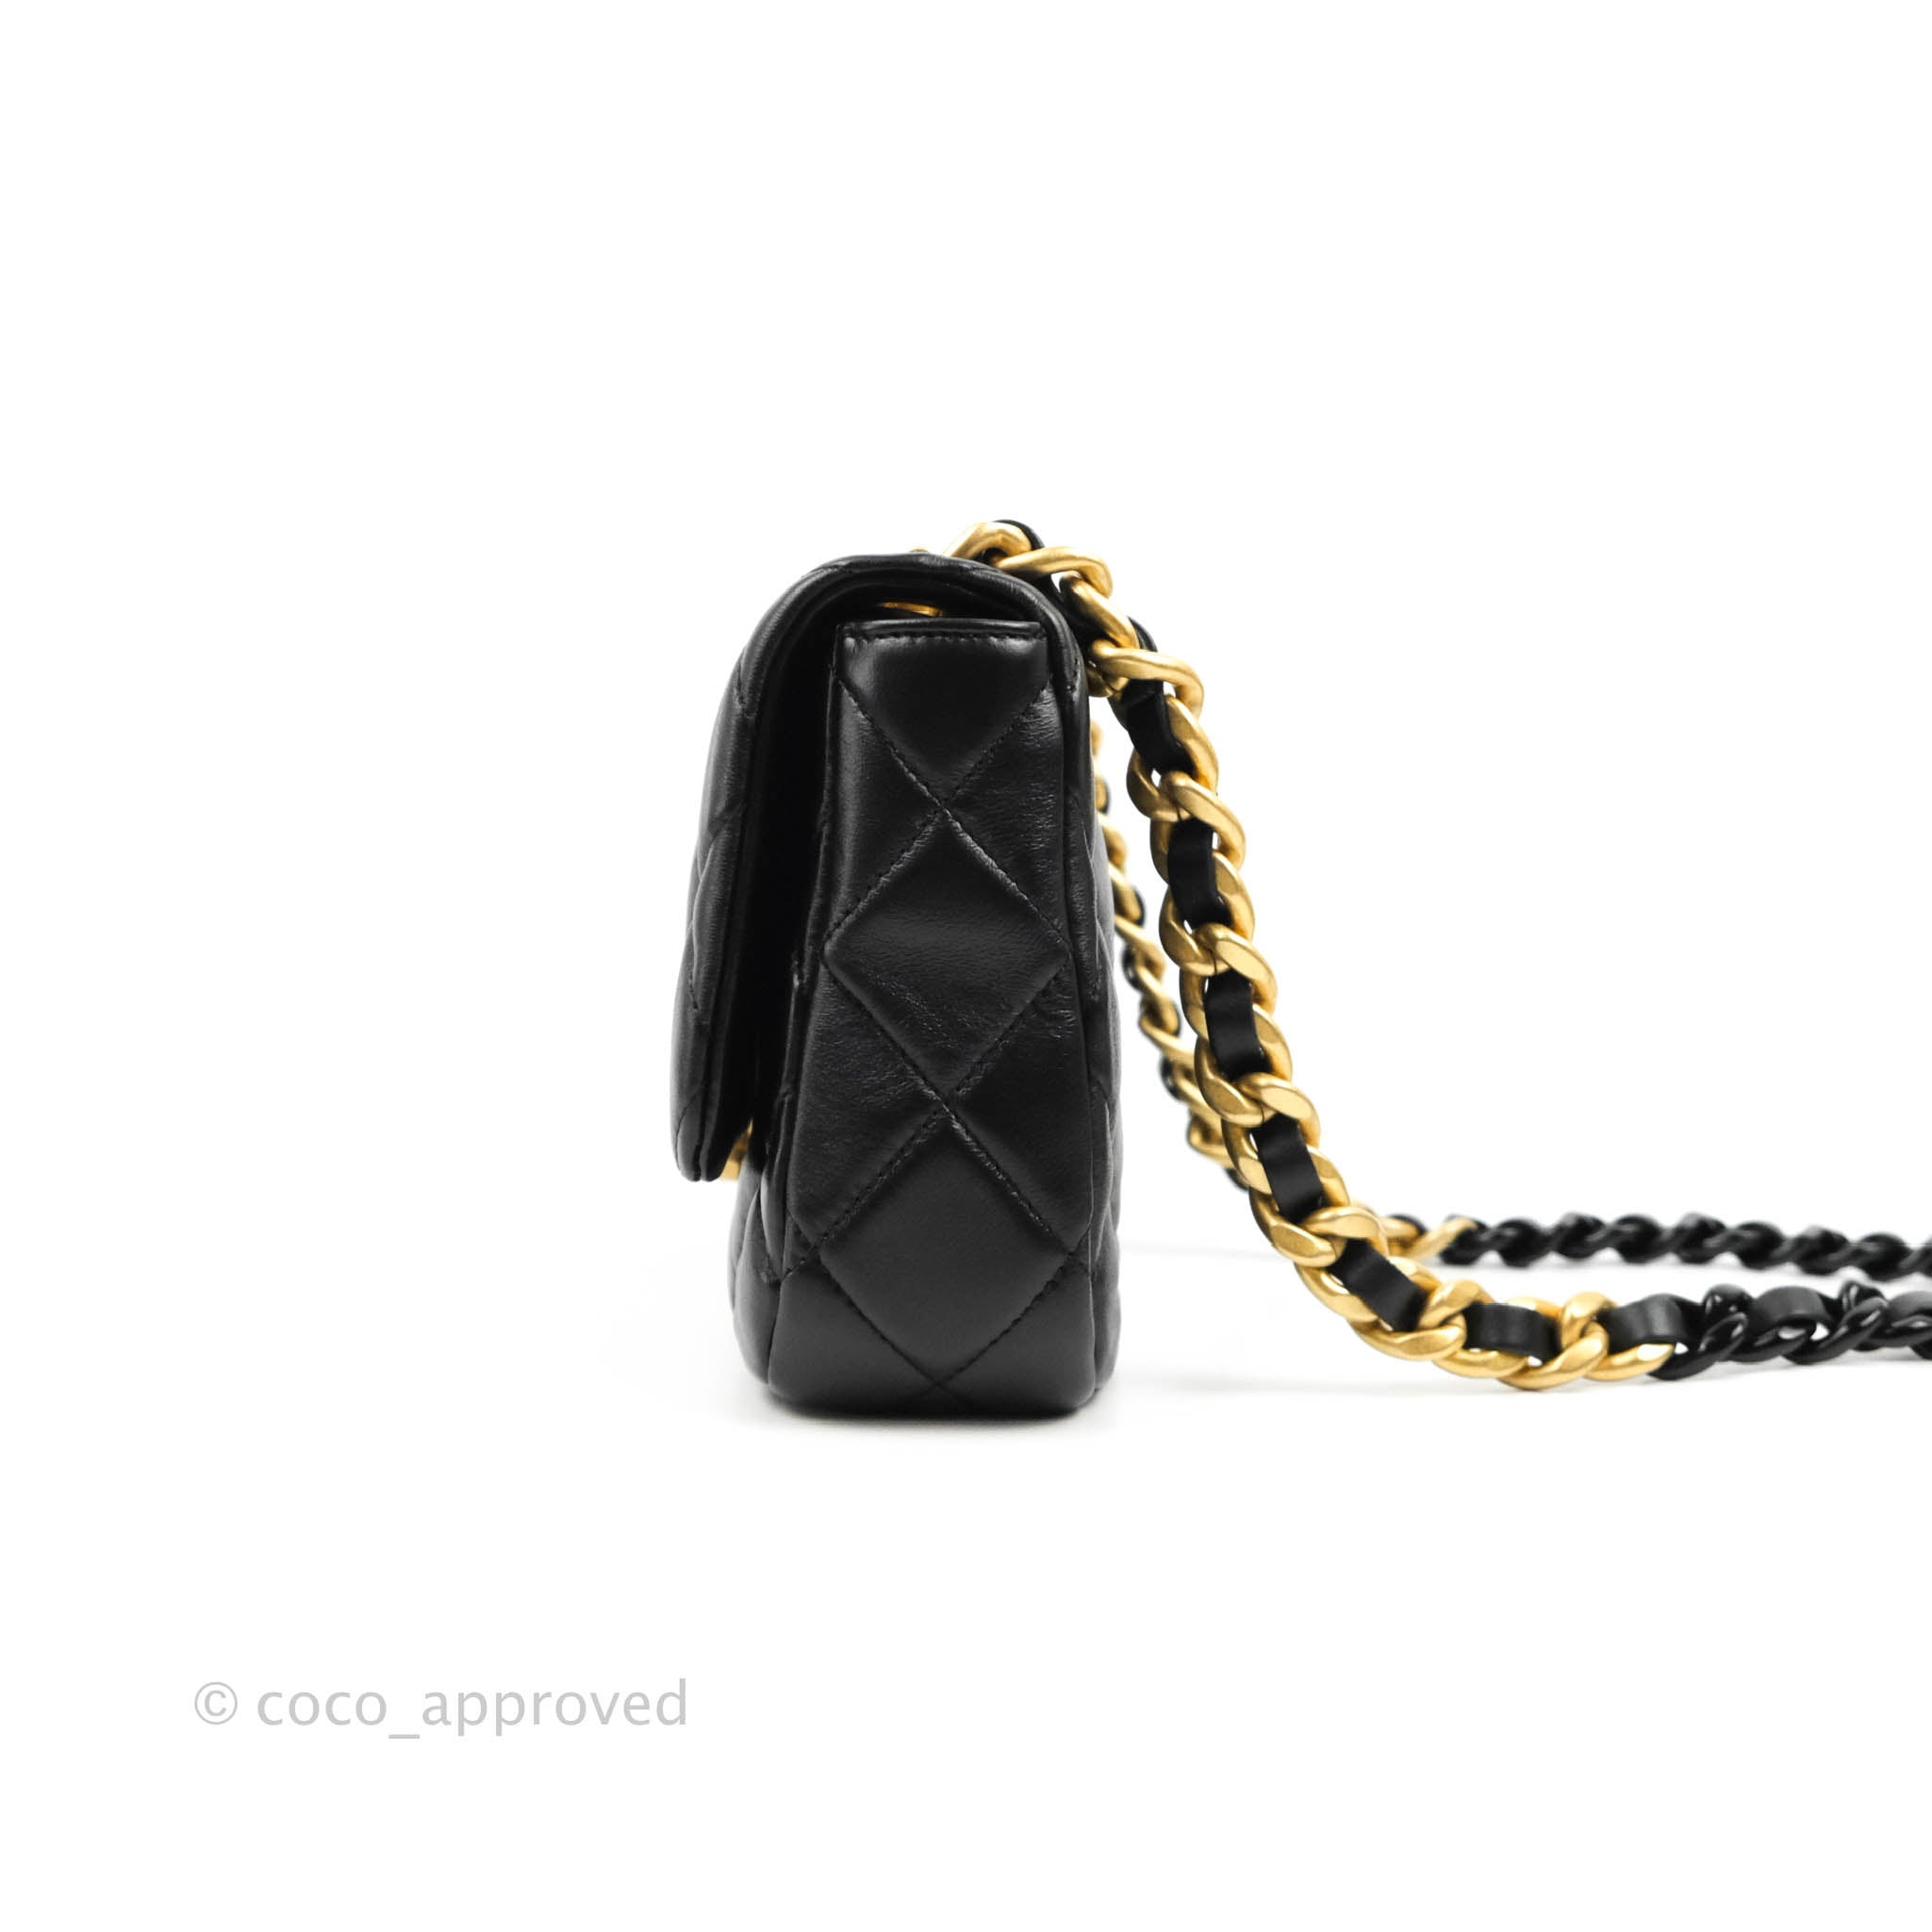 2015 Chanel Rare black Classic flap enamel crossbody top handle bag